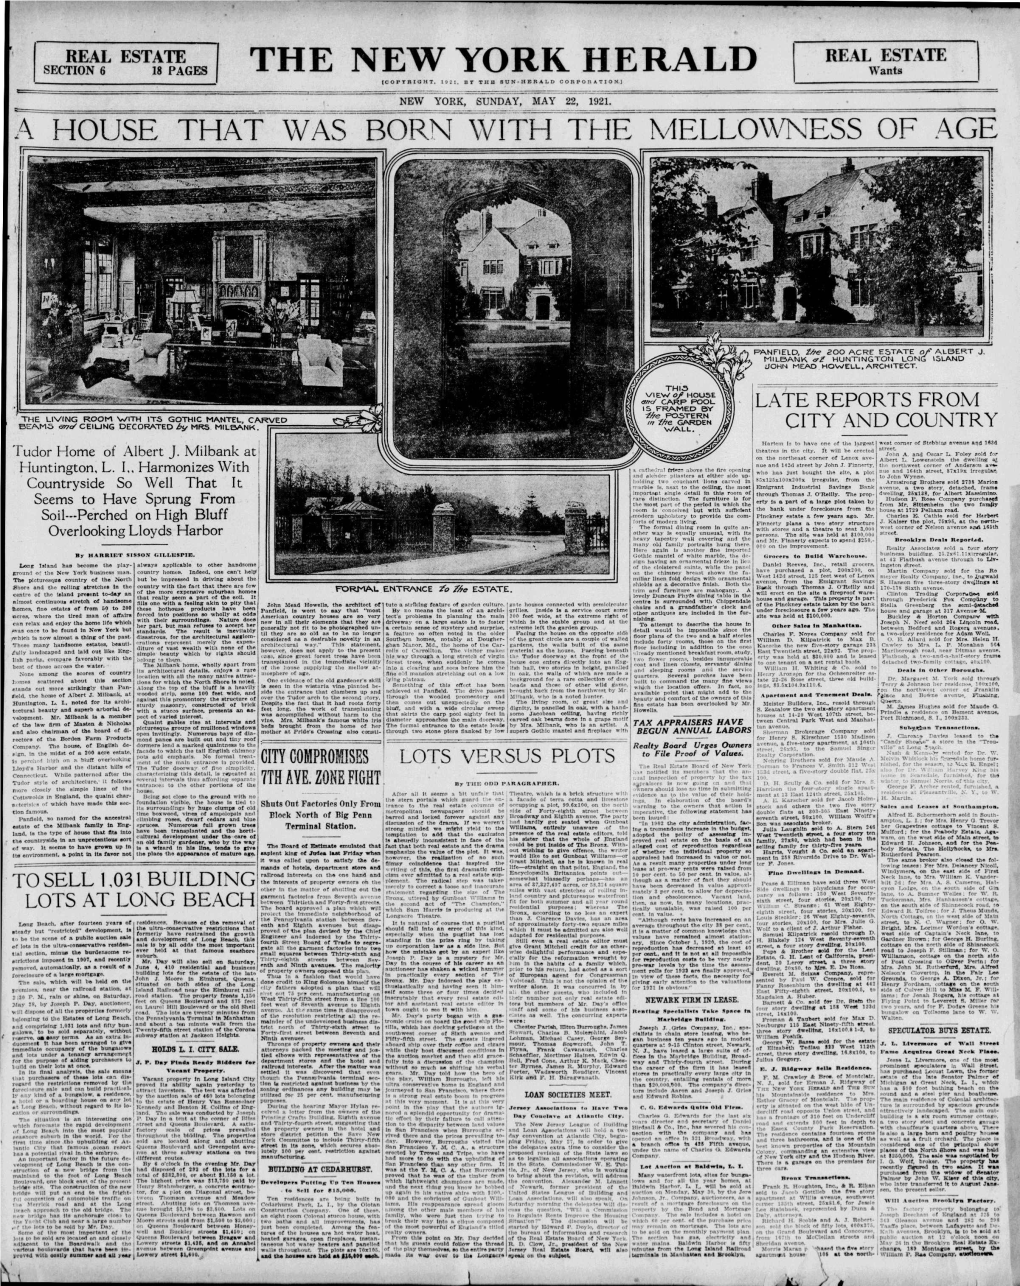 The New York Herald [Copyright, 1921, by Thb Sun-Herald Corporation.] New York, Sunday, May 22, 1921